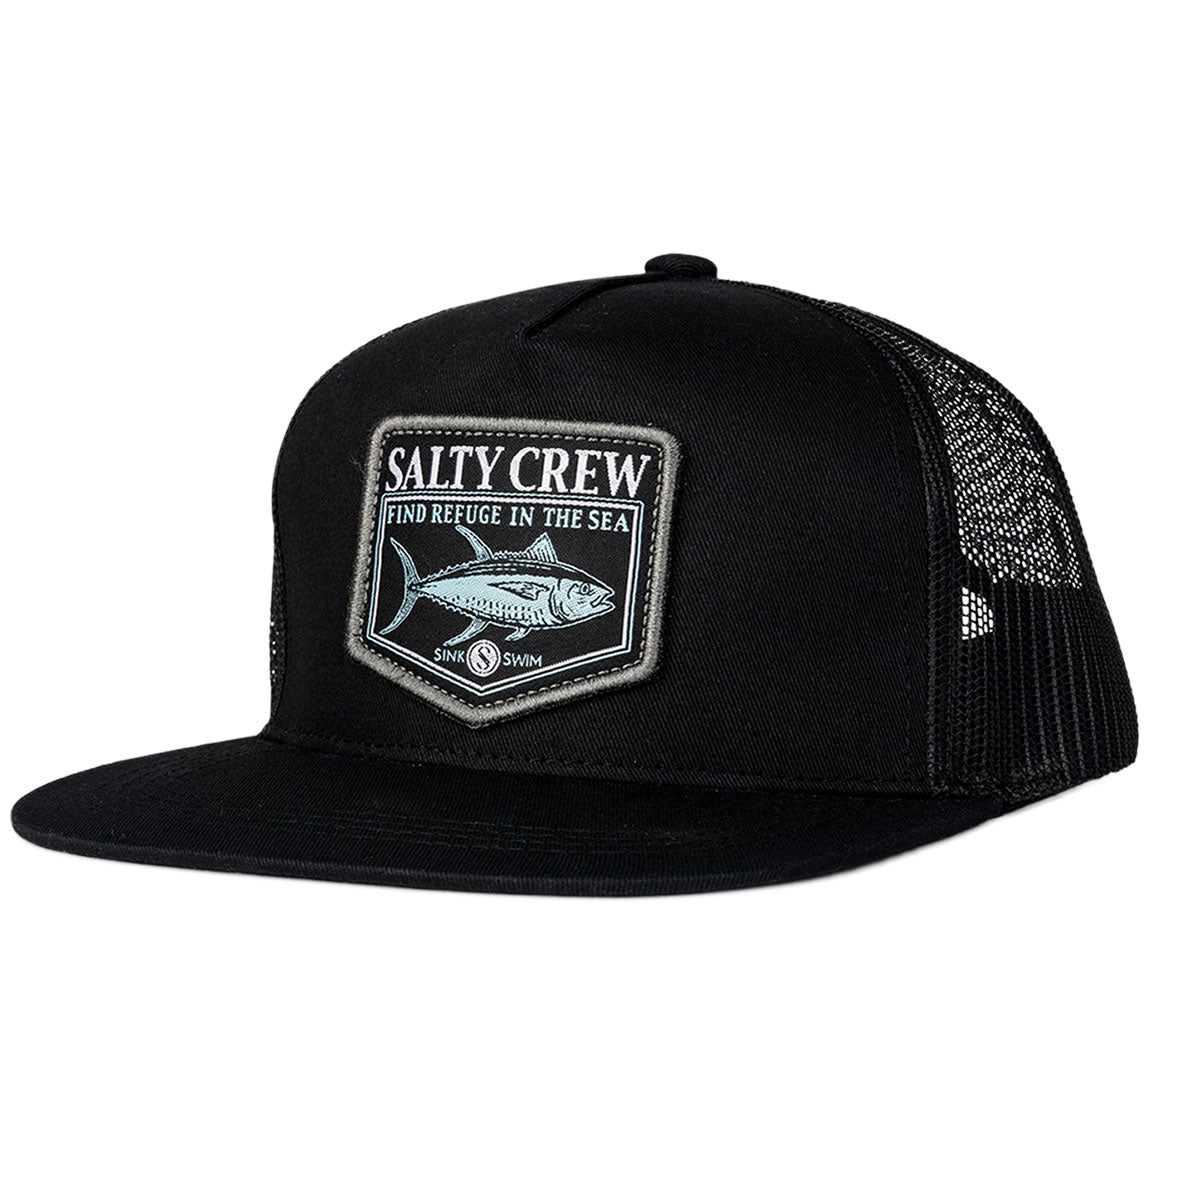 Salty Crew Angler Trucker Hat - Black image 1